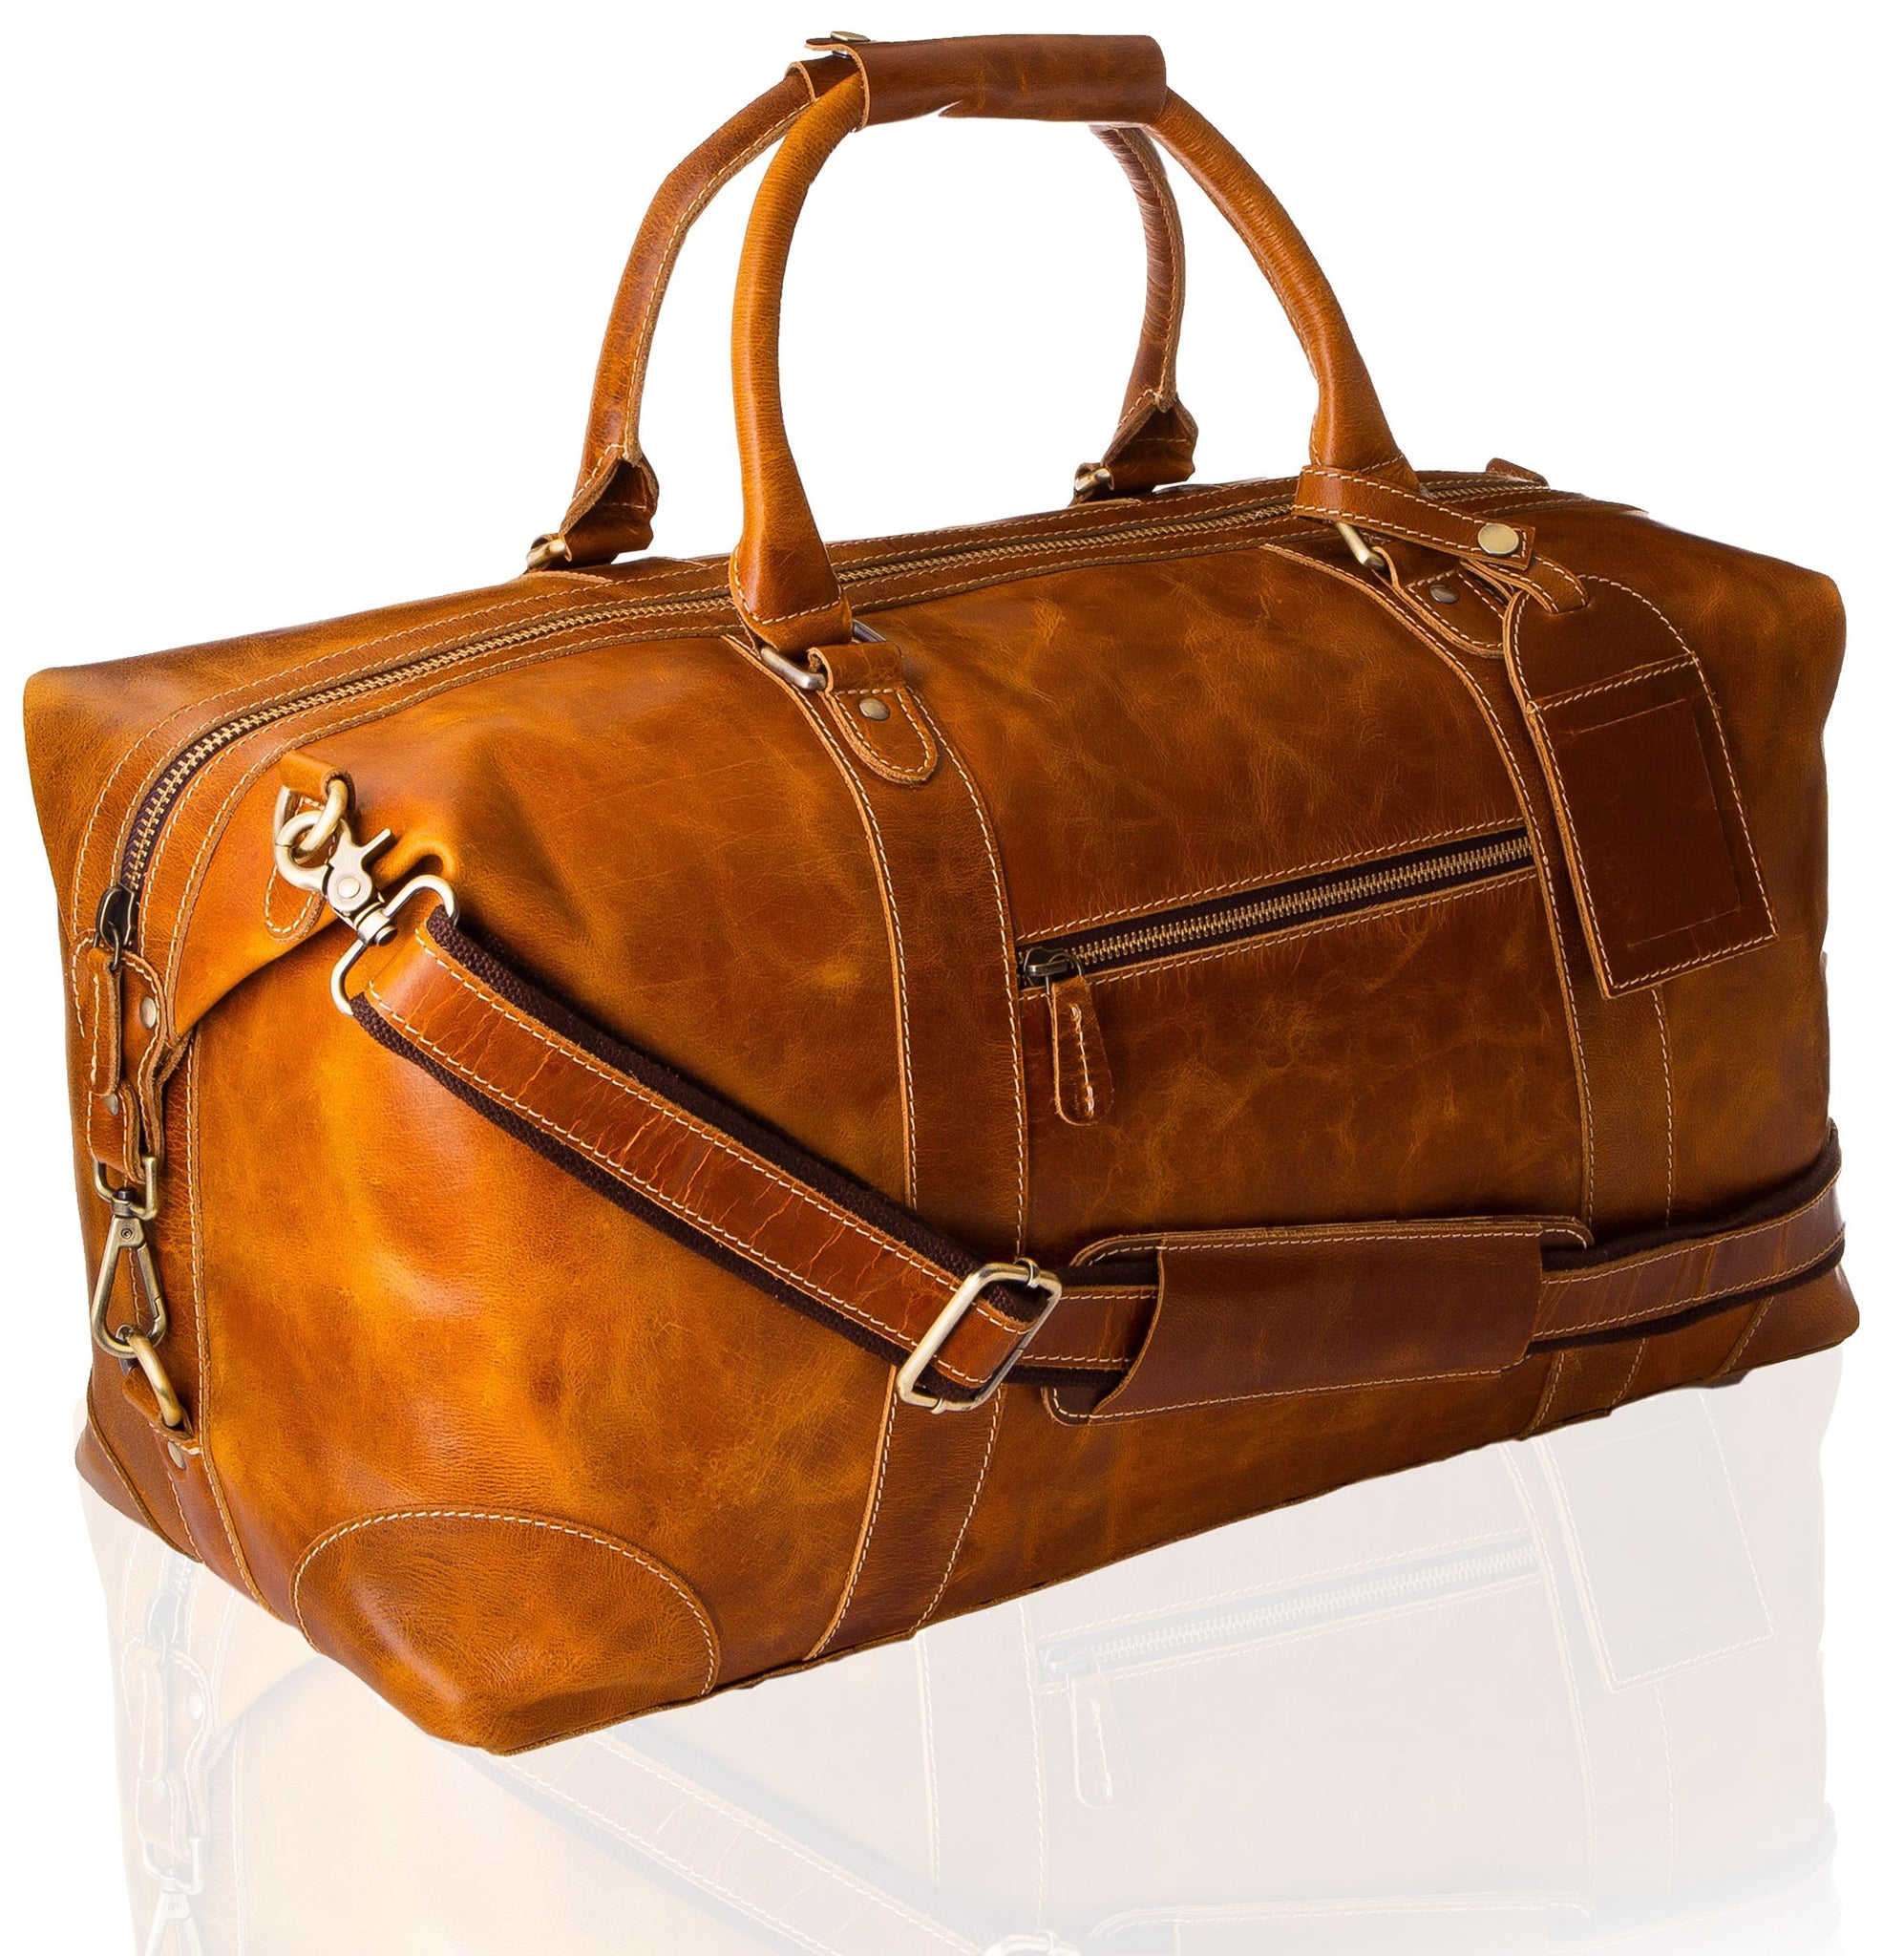 10% OFF on Hi-Speed (Expandable) Travel Duffle Bag Travel Duffel Bag(Purple)  on Flipkart | PaisaWapas.com